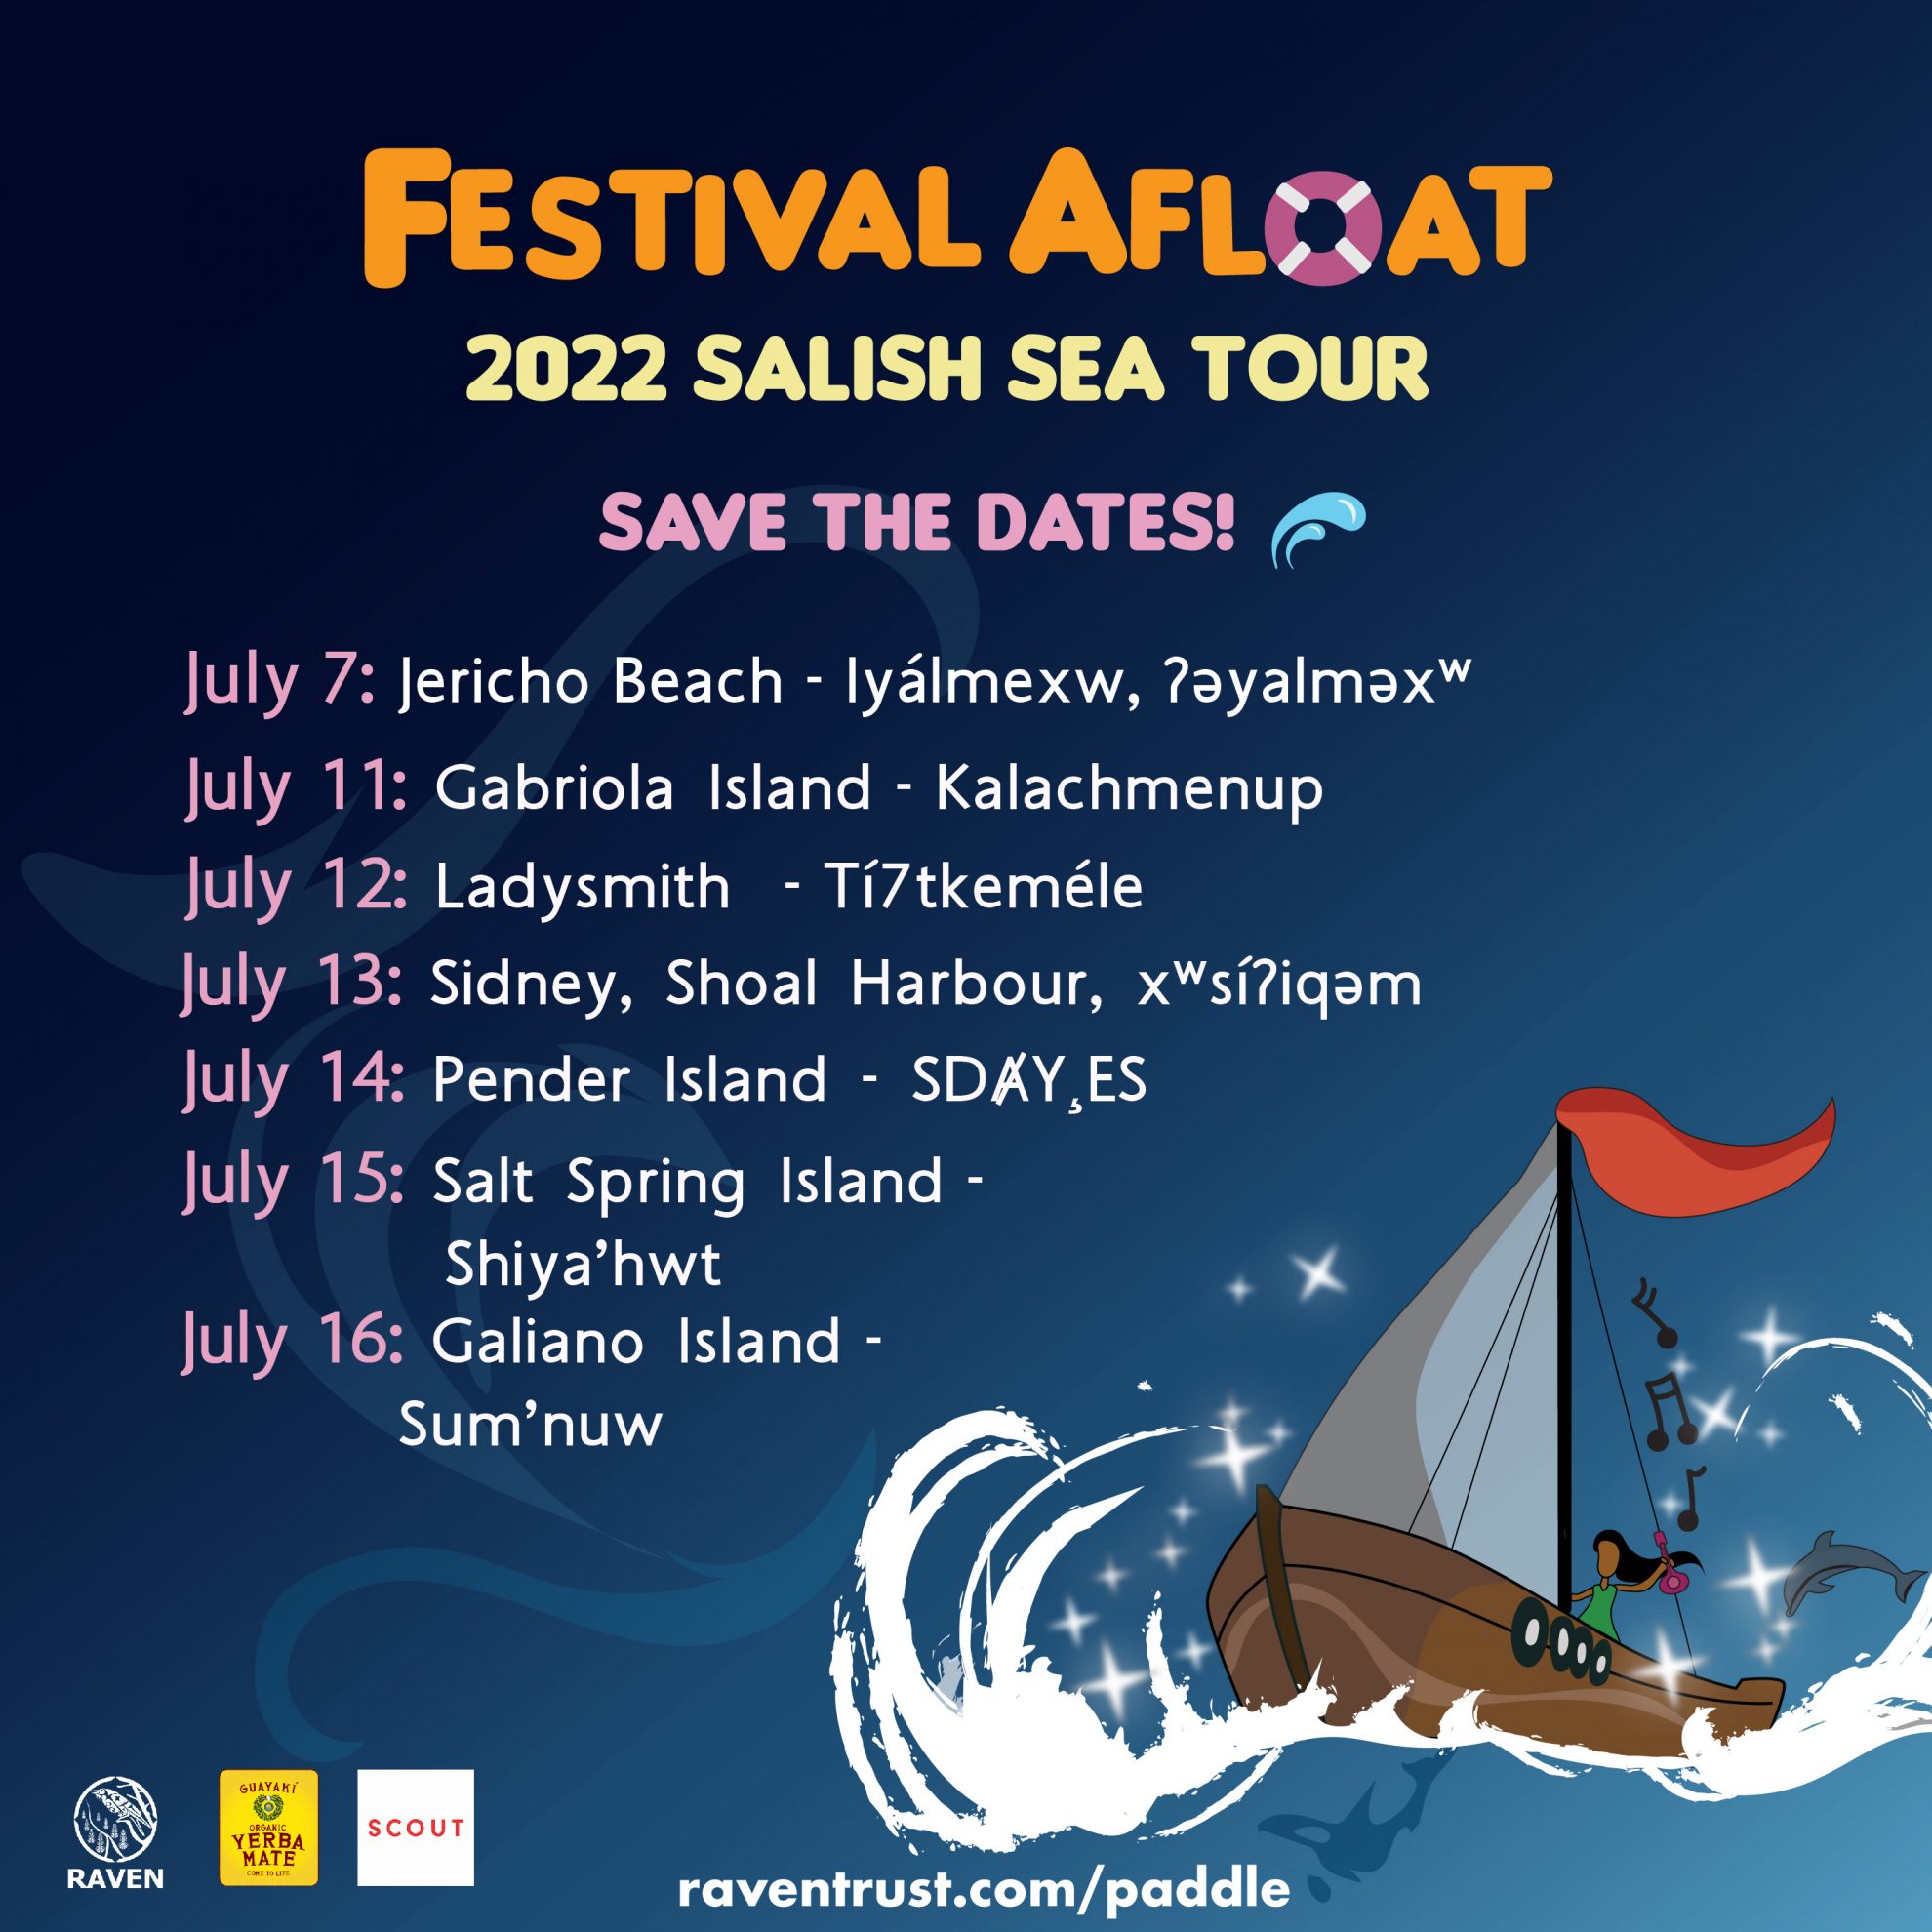 Festival Afloat 2022 Salish Sea Tour Poster